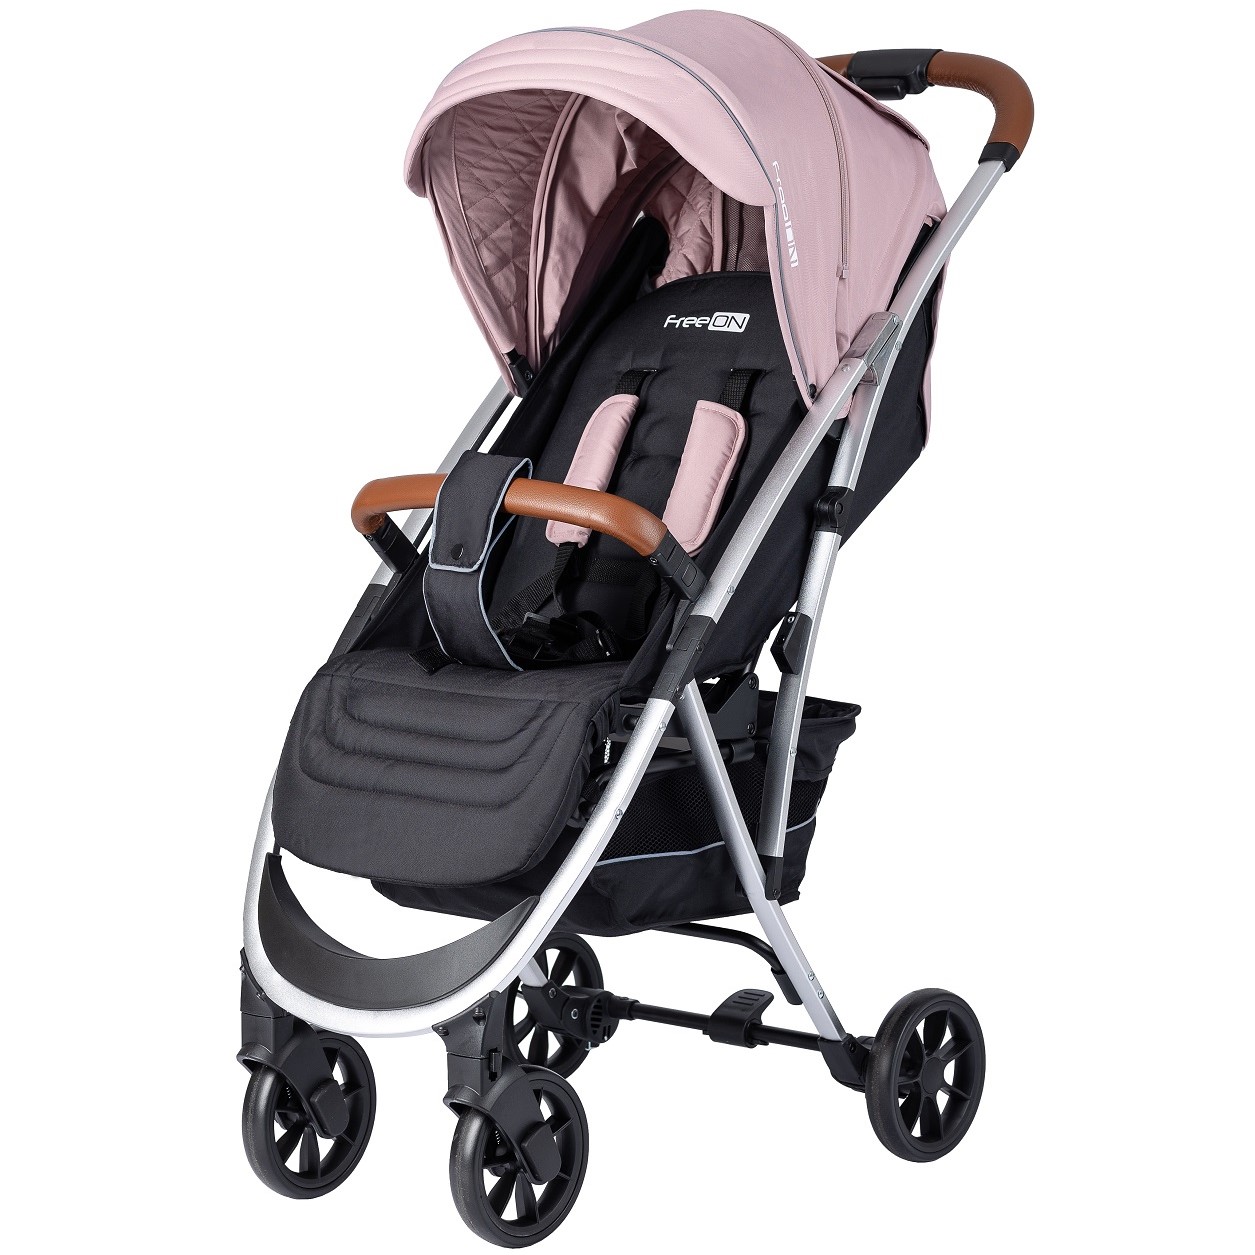 Коляска для дитини прогулянкова FreeON LUX Premium Dusty Pink-Black - фото 1